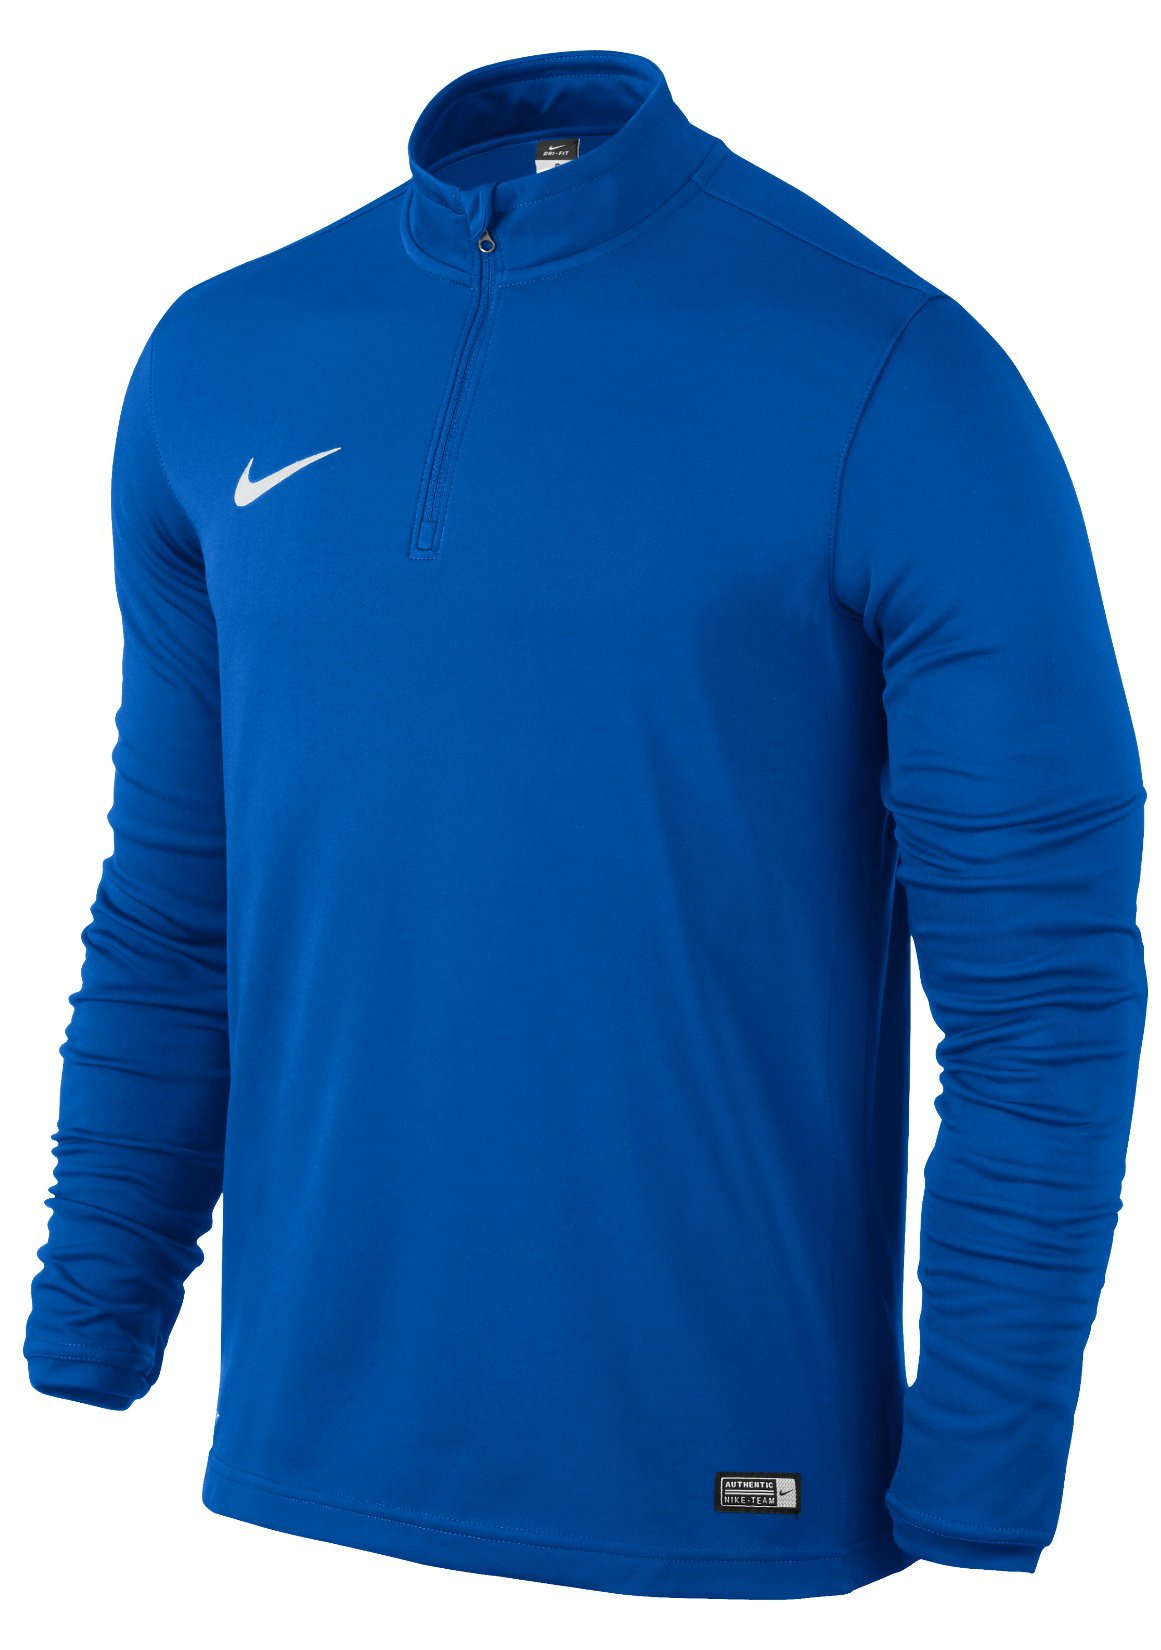 Long-sleeve T-shirt Nike ACADEMY16 MIDLAYER TOP